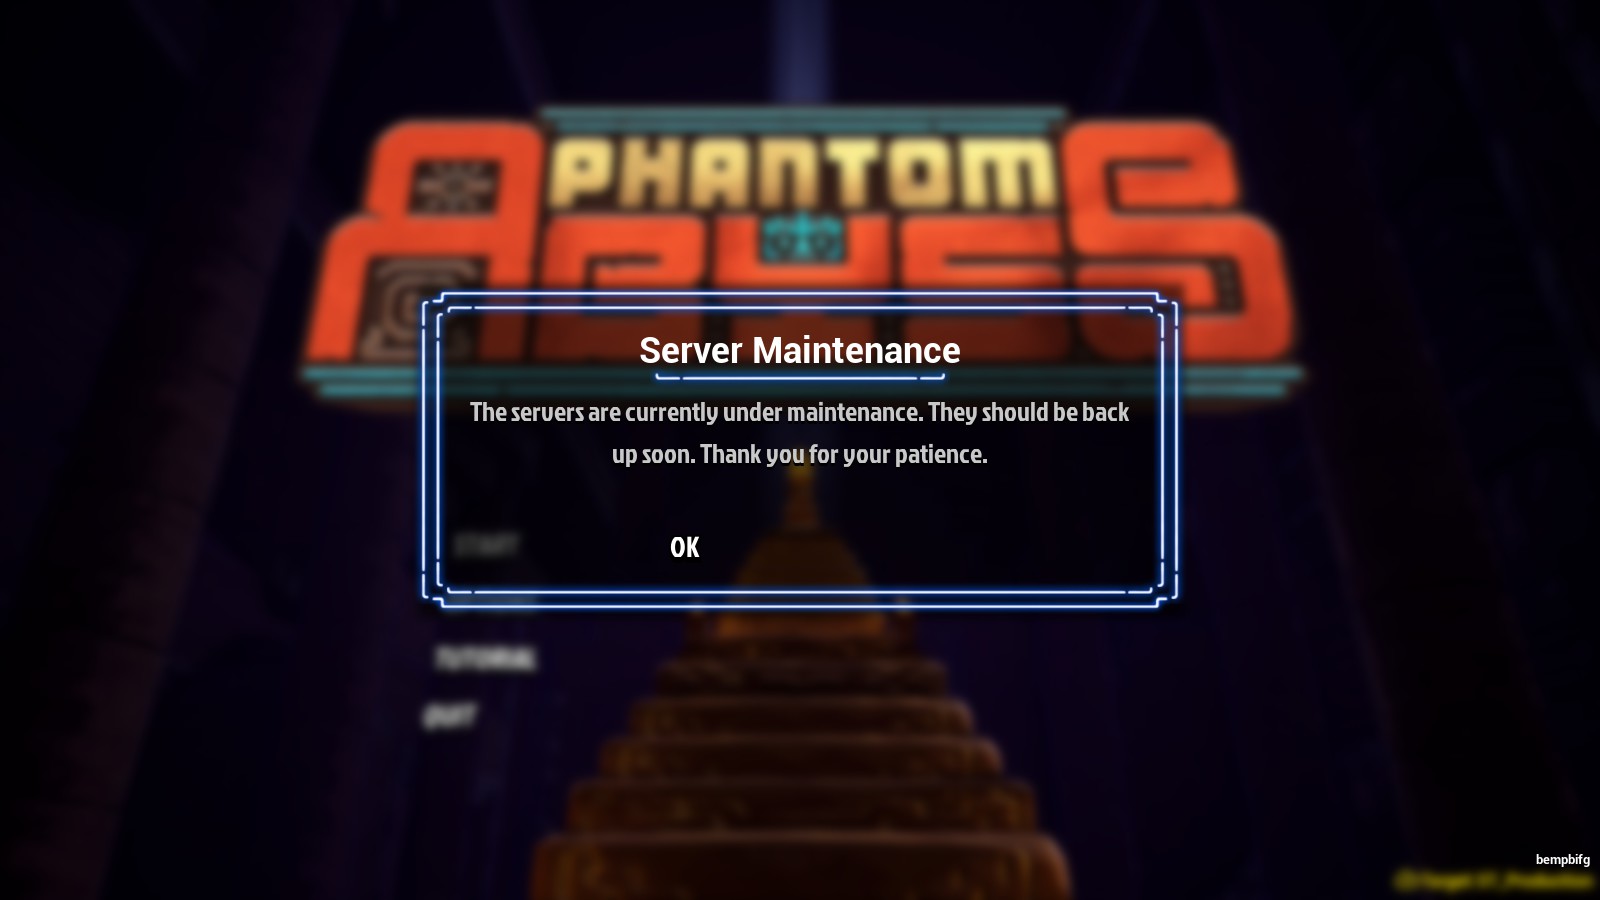 Phantom Abyss Server Maintenance